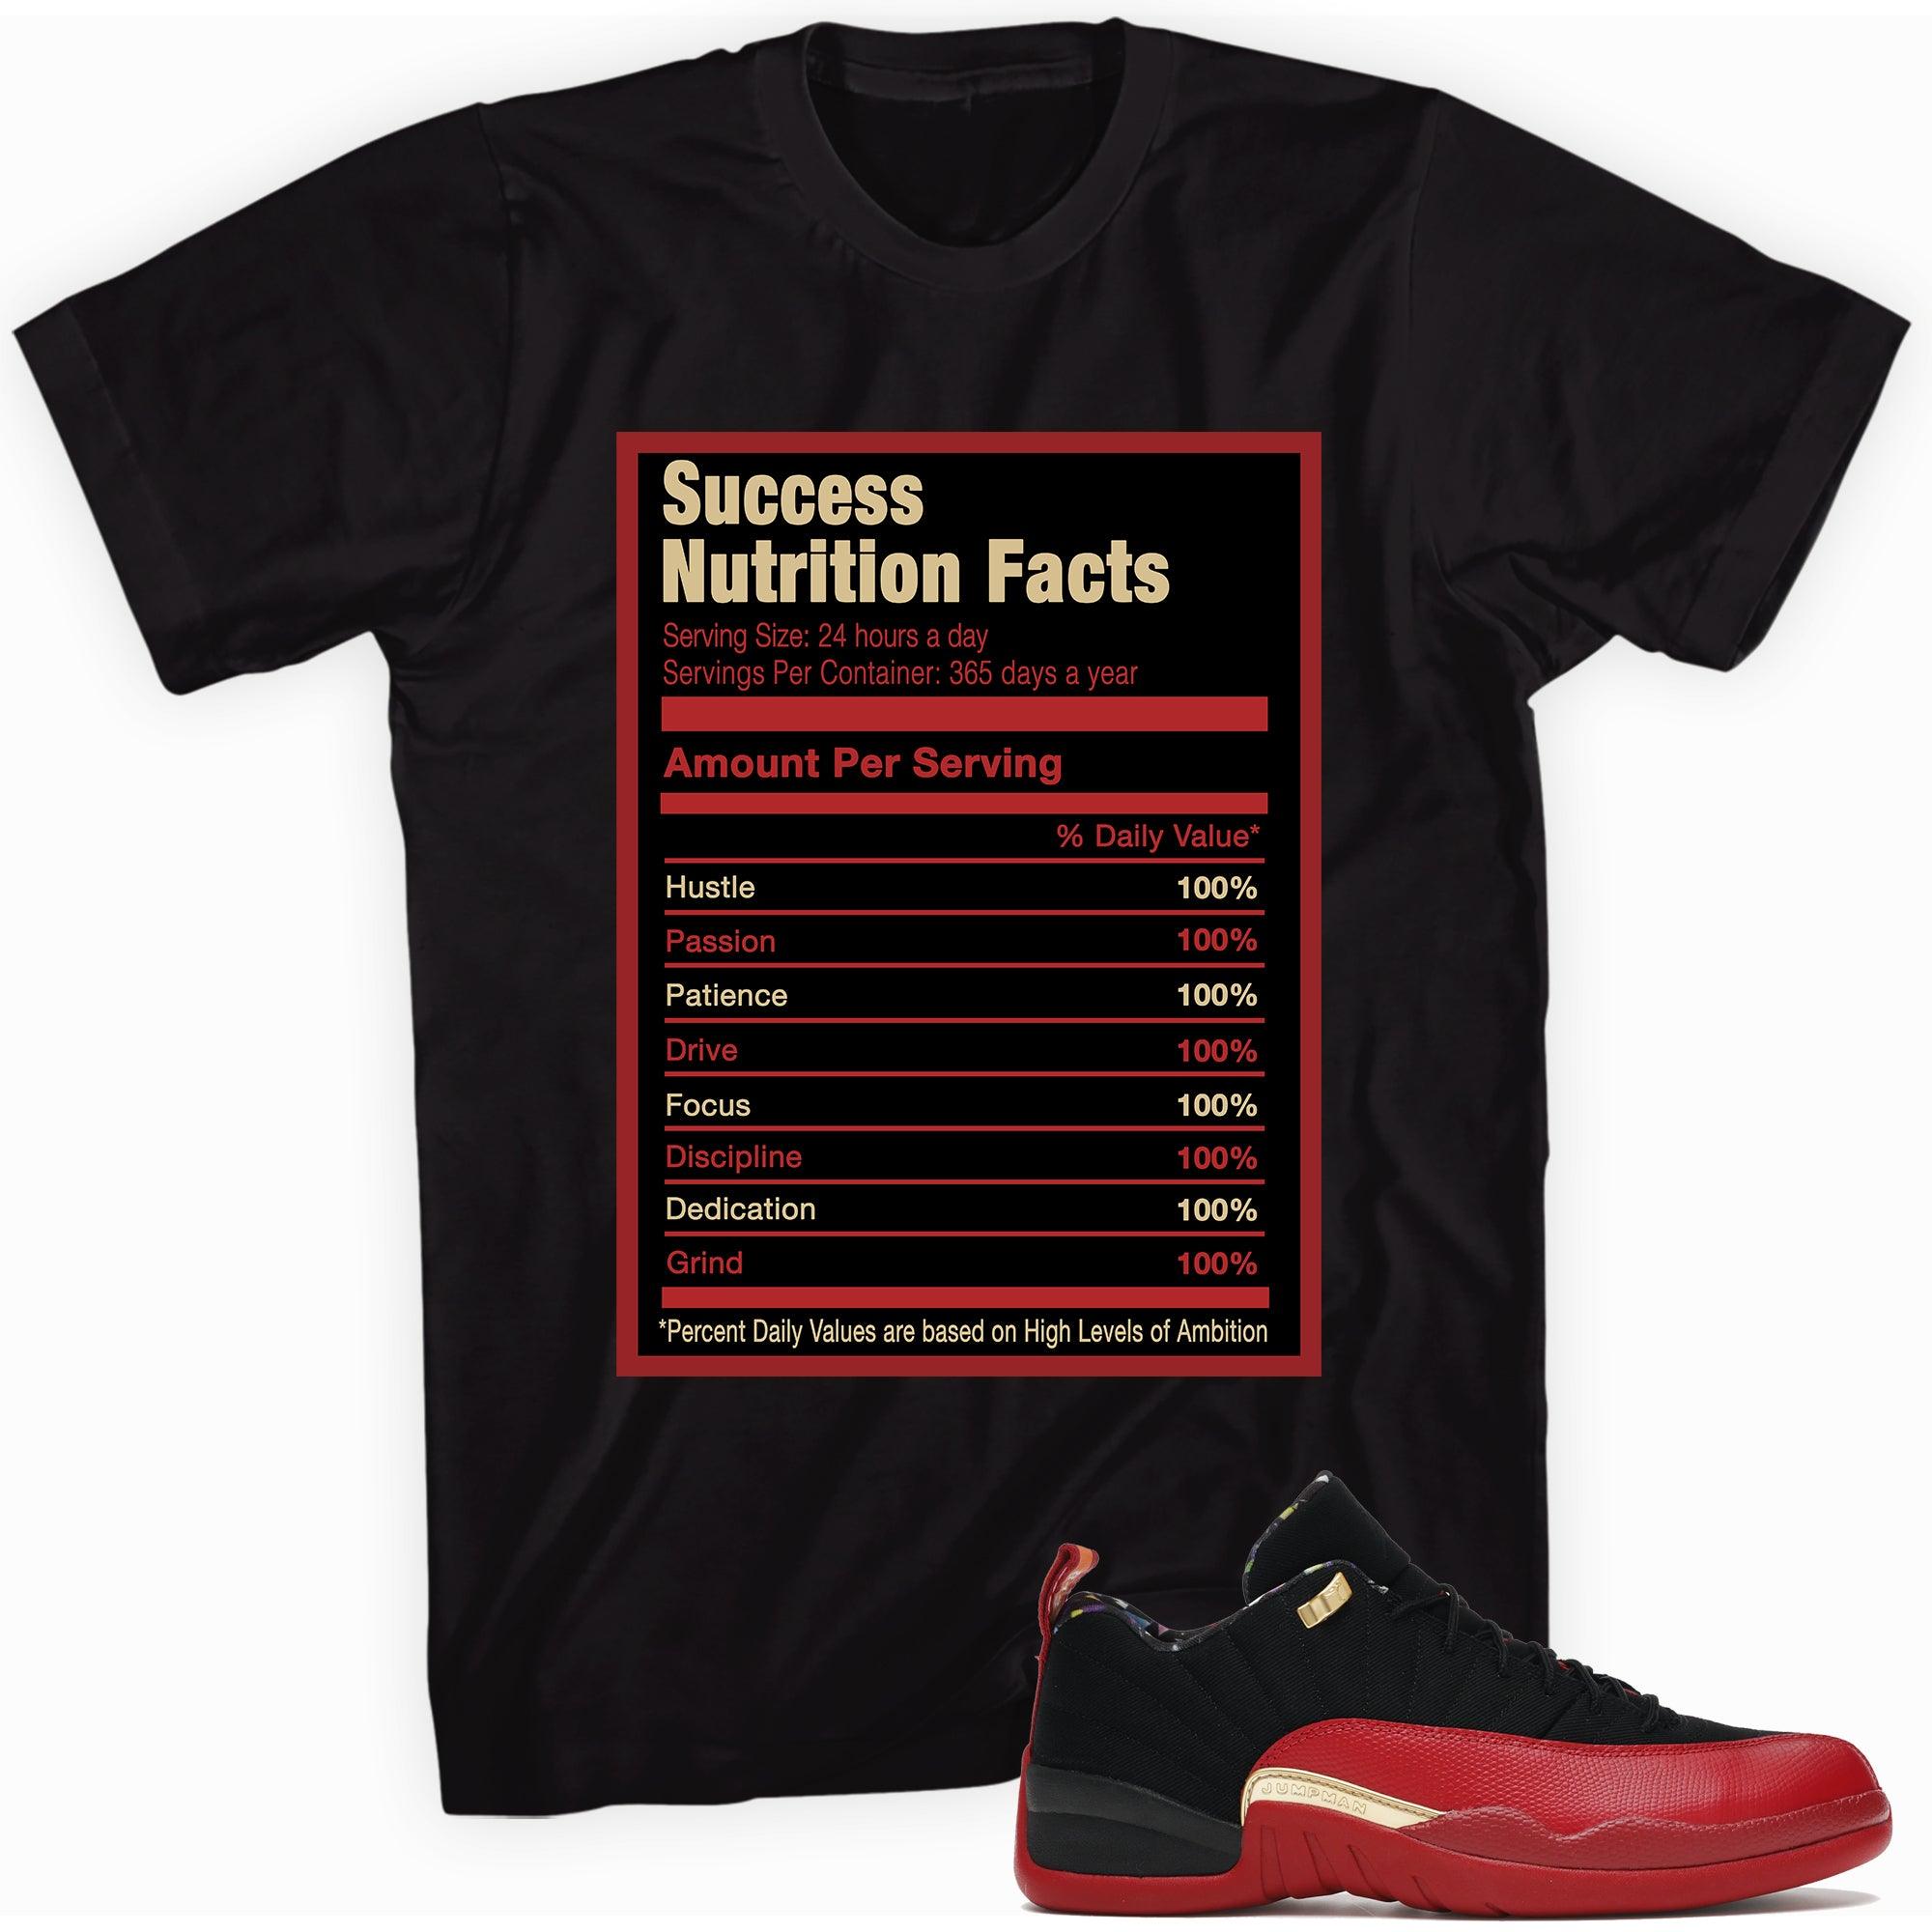 Success Nutrition Sneaker Tee AJ 12 Low SE Super Bowl LV photo